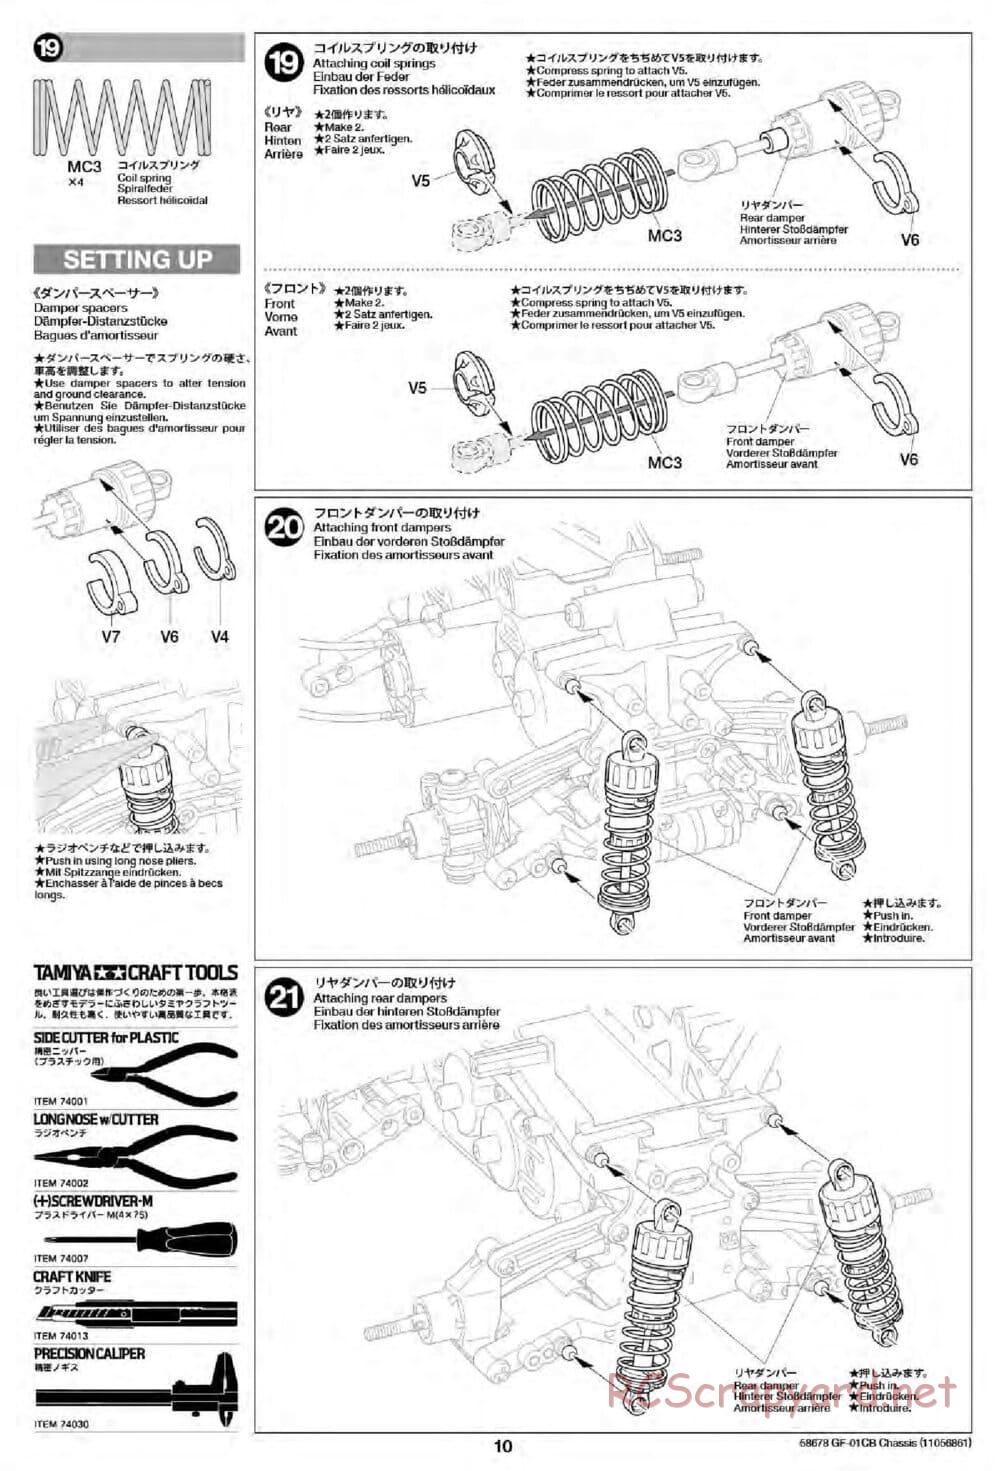 Tamiya - Comical Avante - GF-01CB Chassis - Manual - Page 12